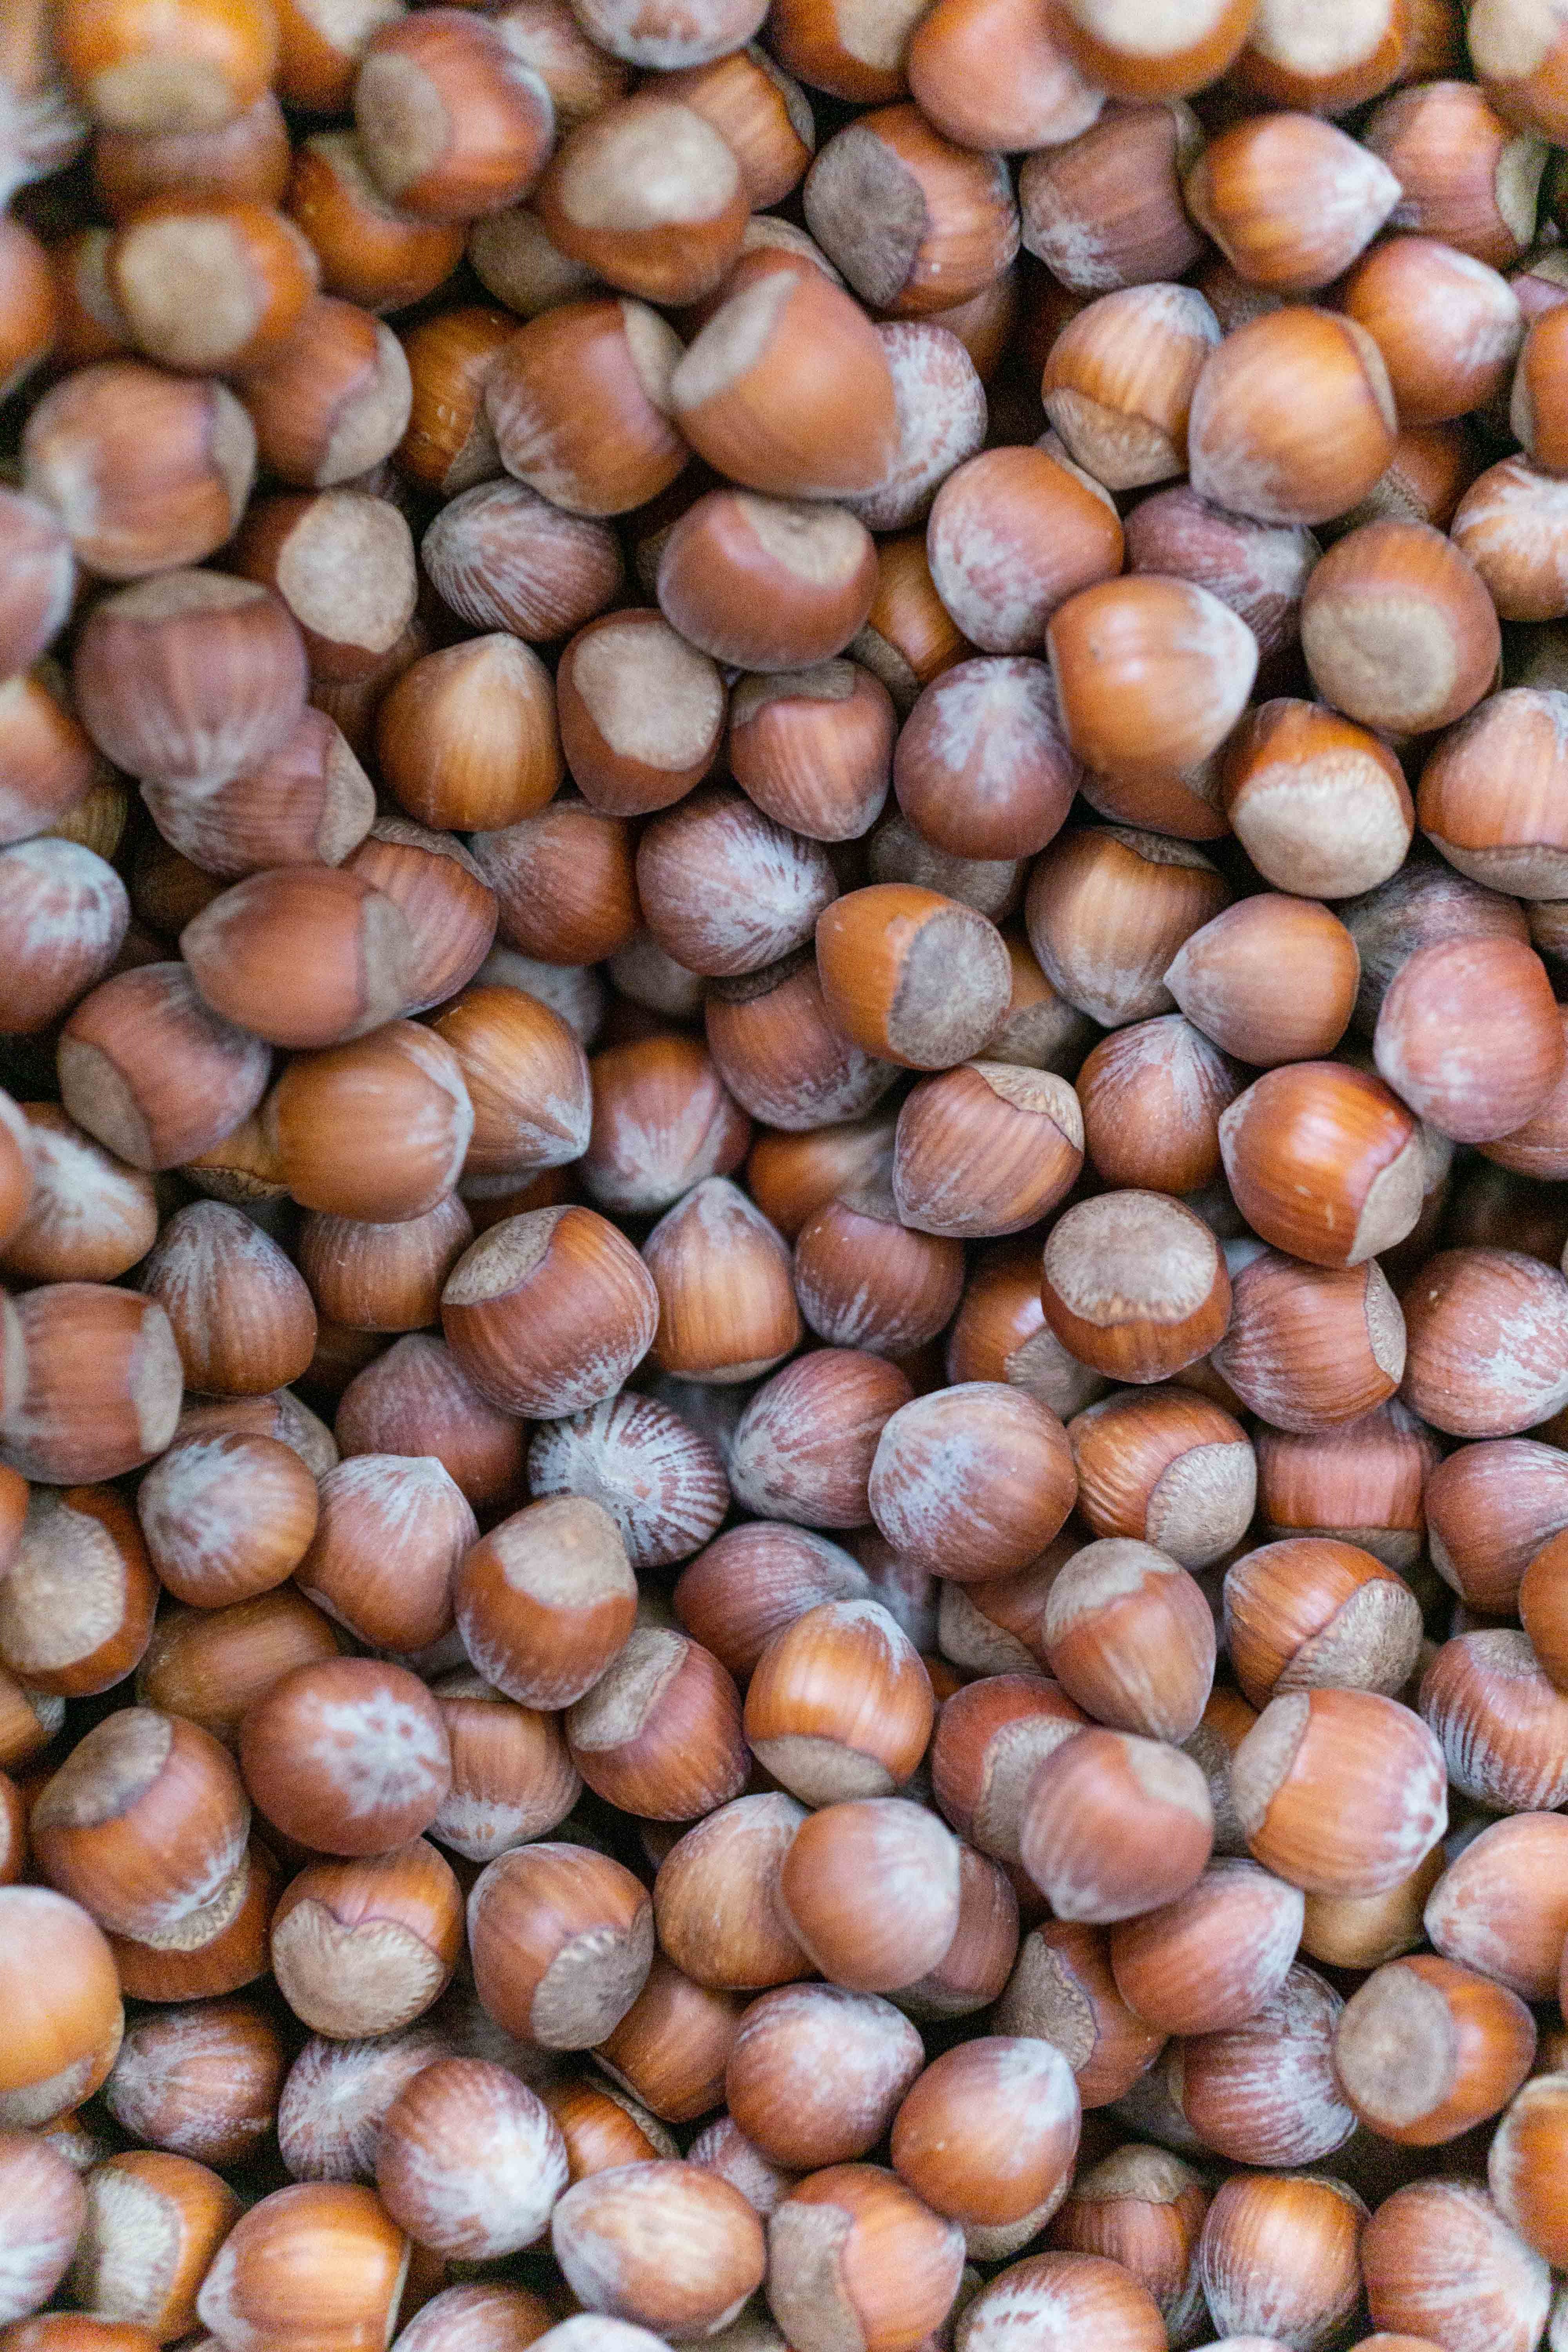 Hazelnuts in shell, France, assortment 20-22mm